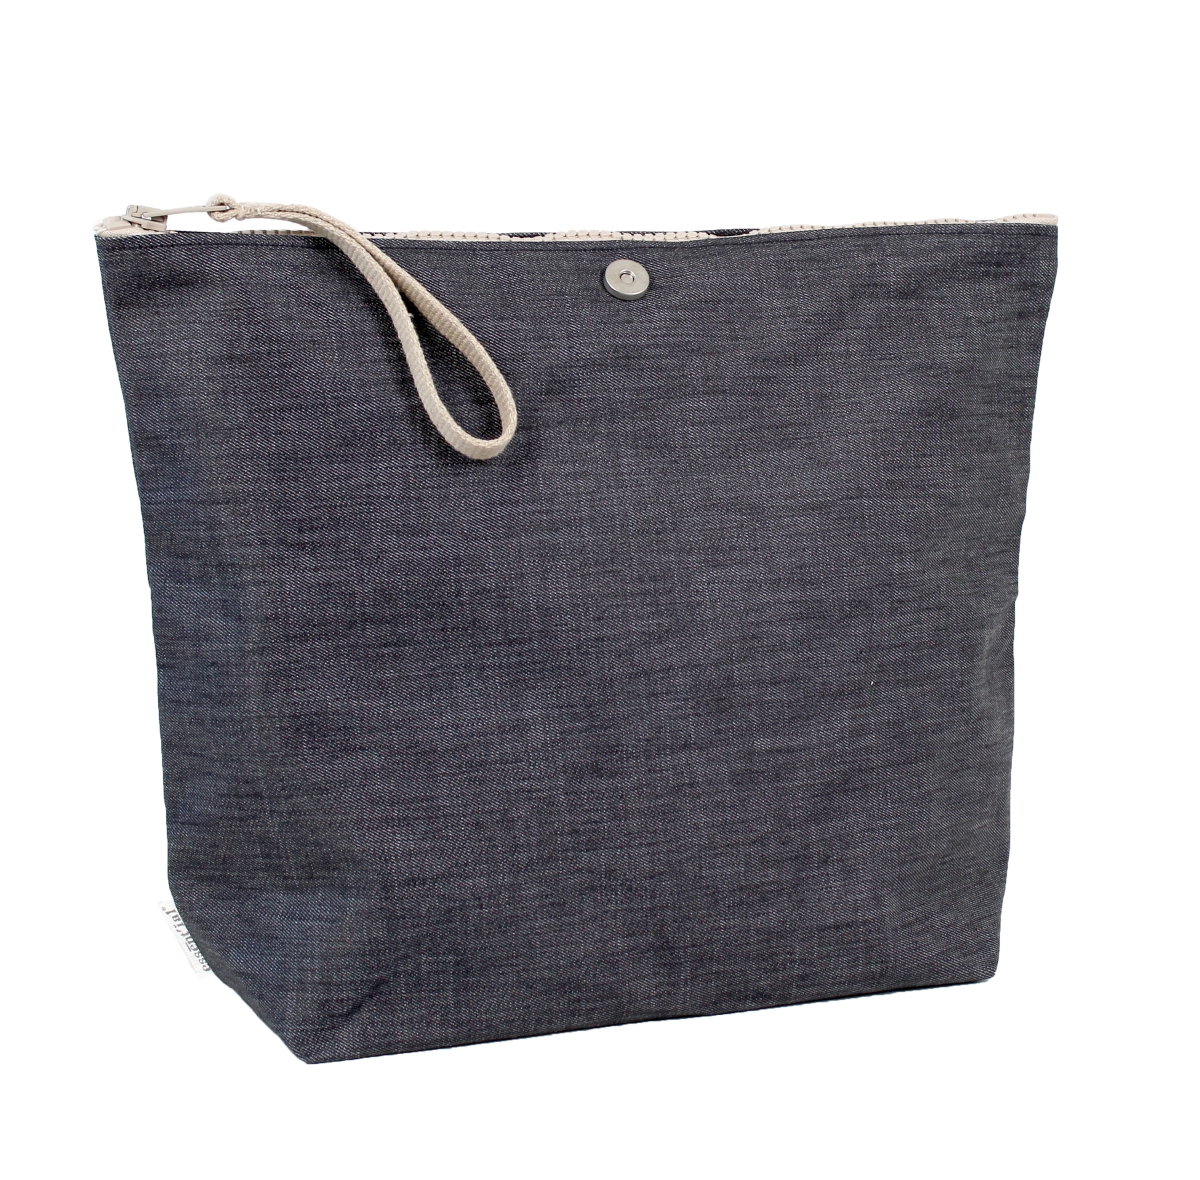 Essential Es002054 Bag Denim Handbags